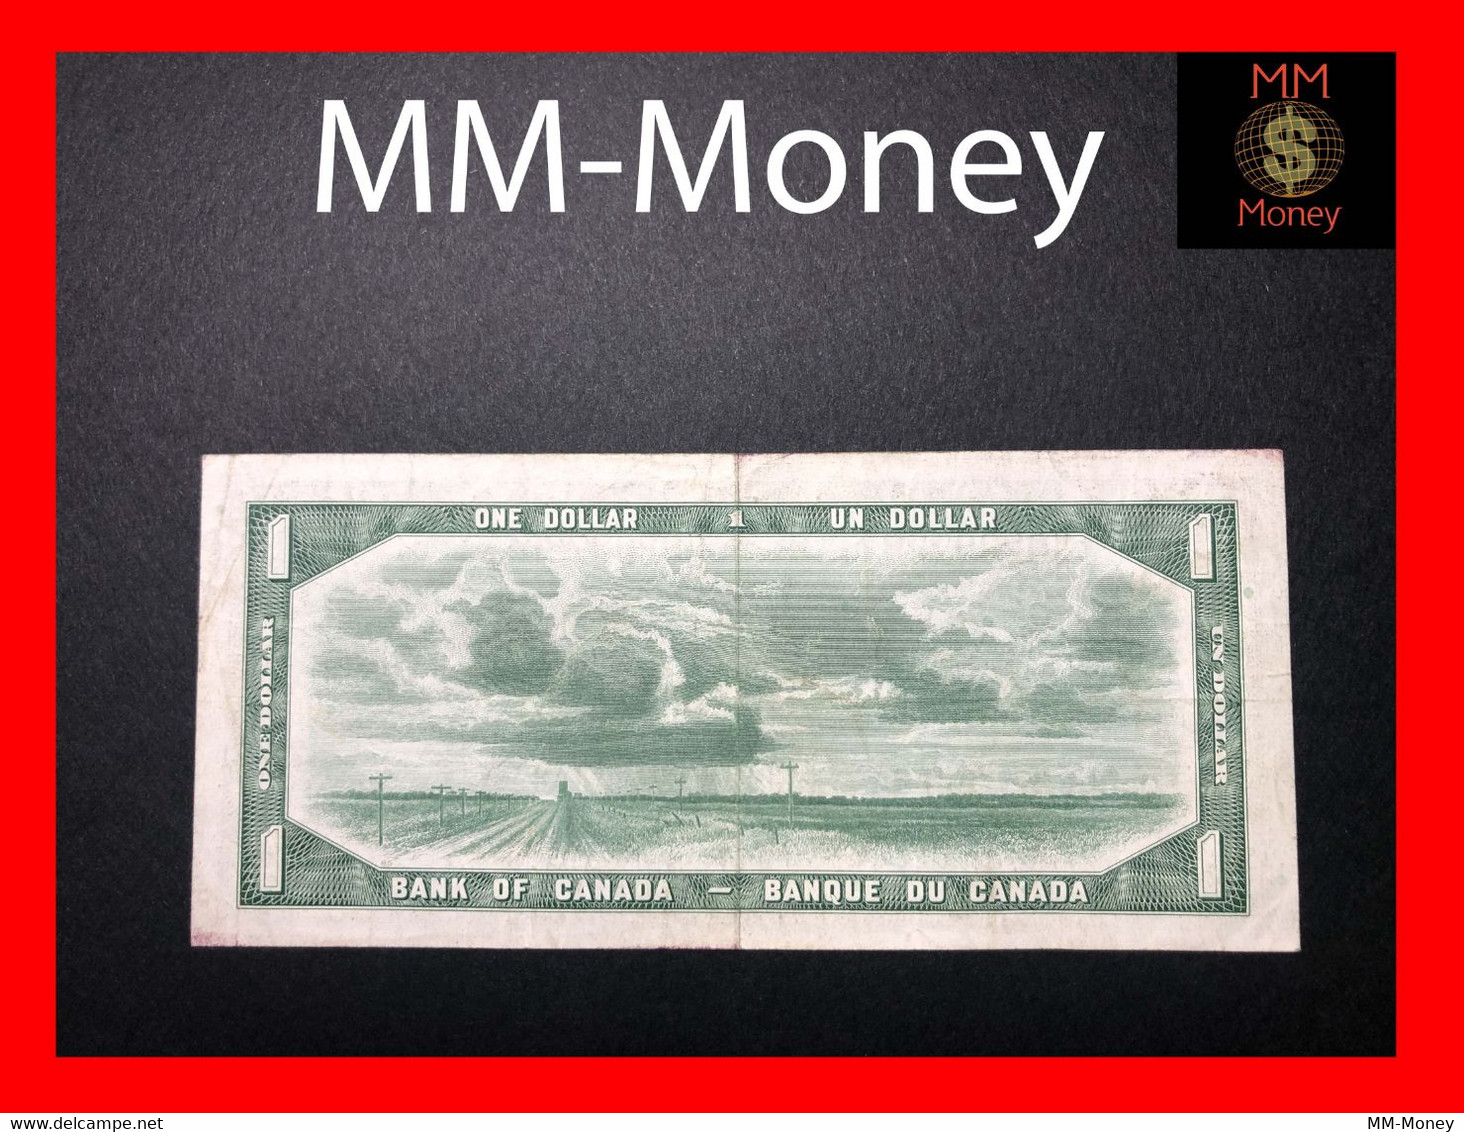 CANADA  1 $  1954  P. 74  "sig. Beattie - Rasminsky"     VF    [MM-Money] - Canada